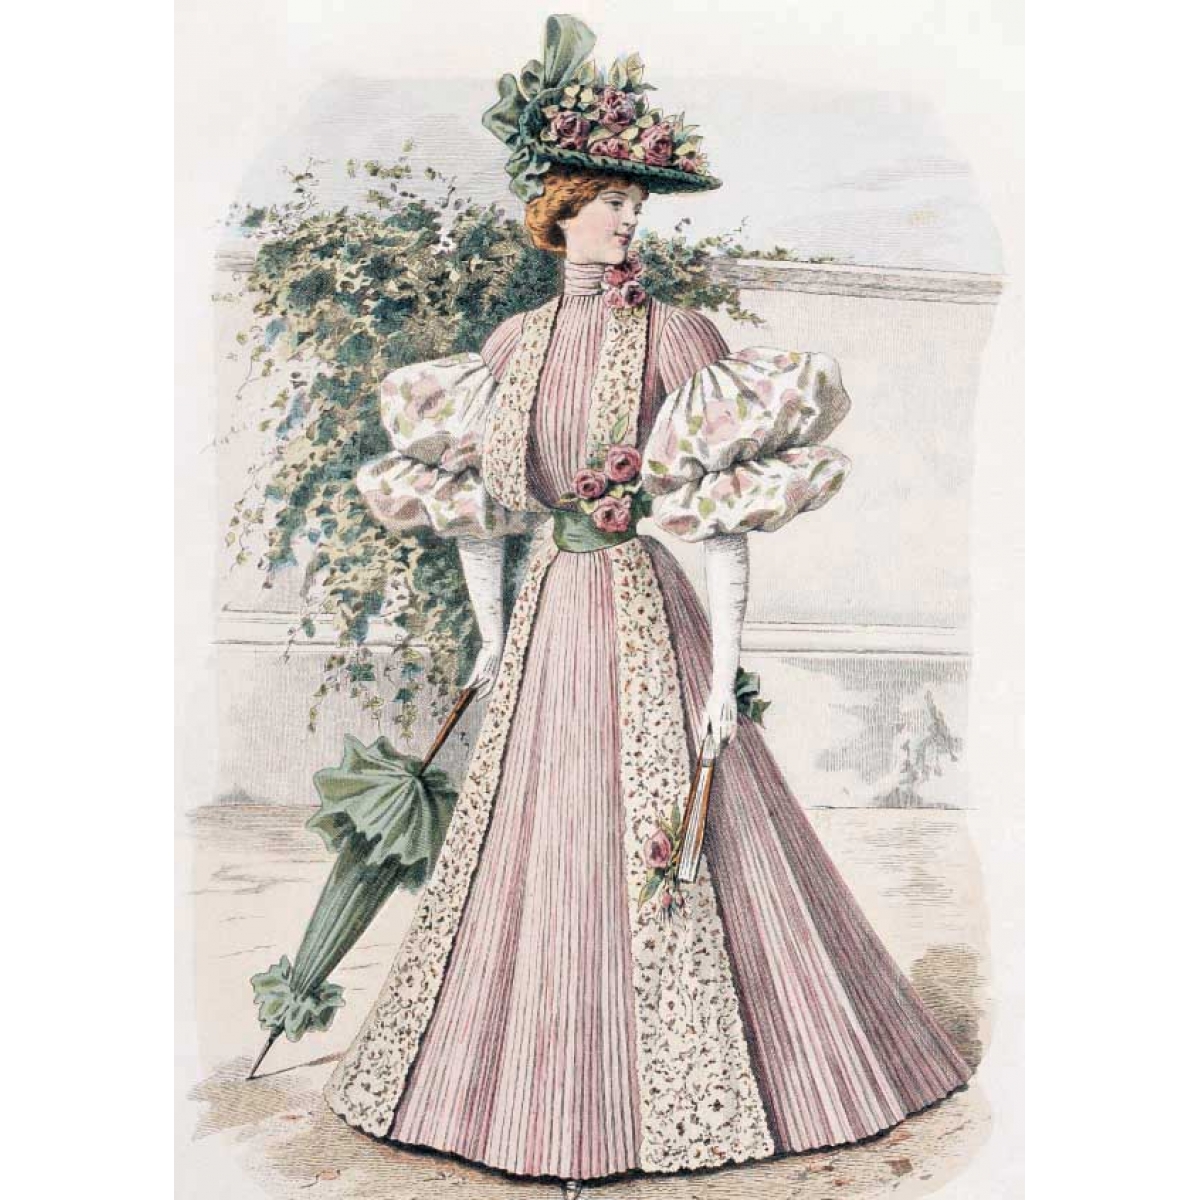 1890 е в россии. Мода 1895 года. Мода 1890. Парижская мода 1895г. Мода Франции 1860 - 1898 век принцесса.